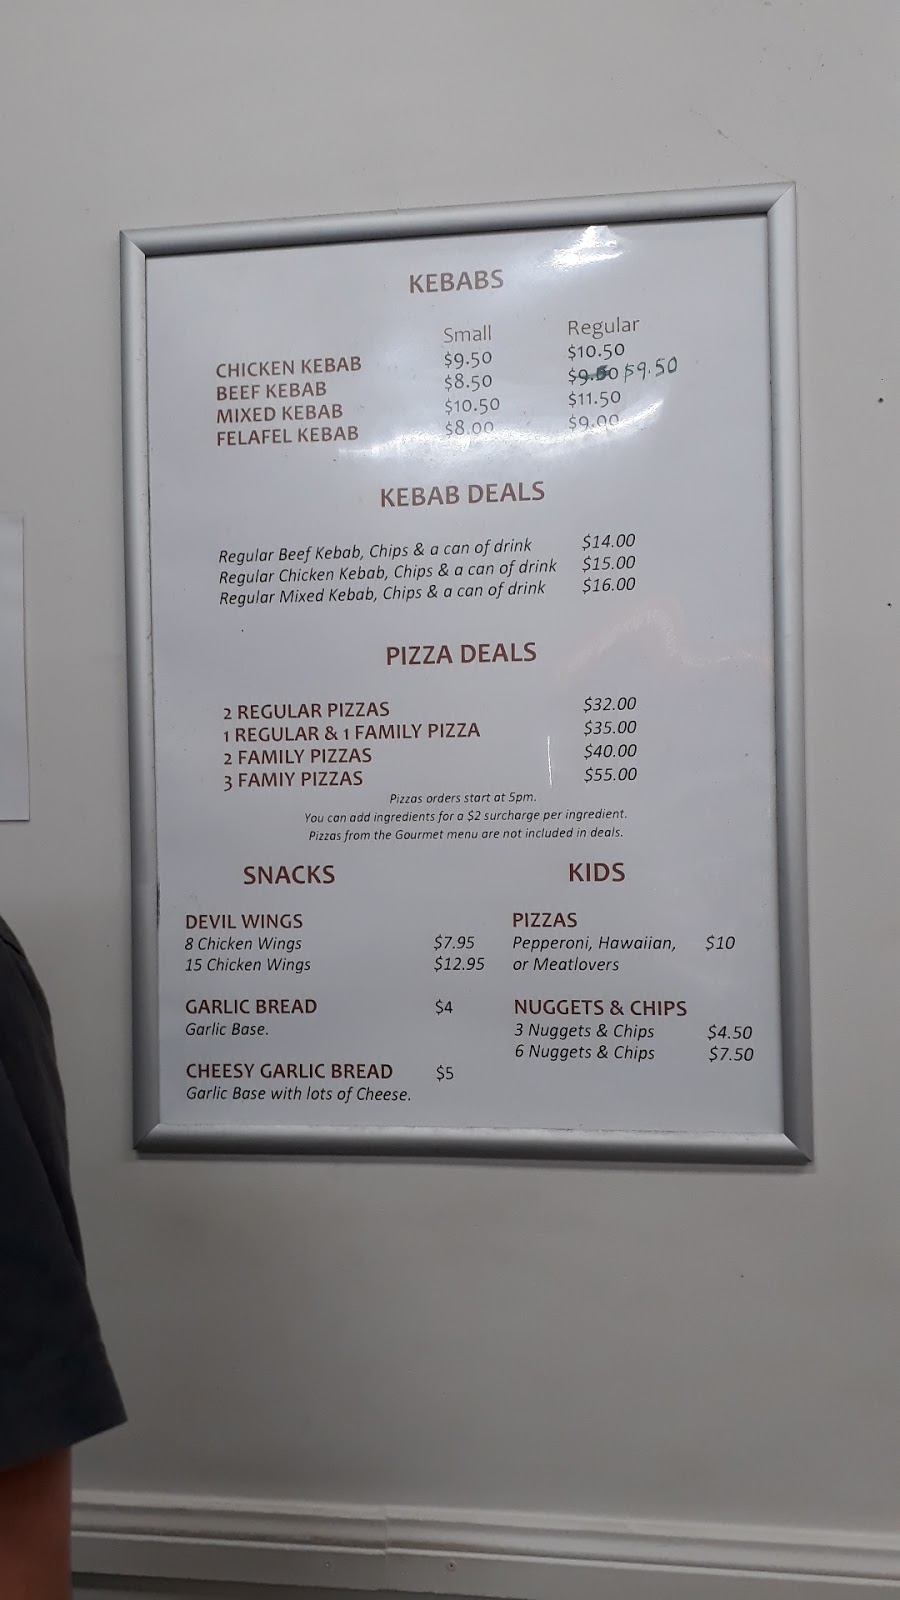 JJs Kebabs and Pizza | meal takeaway | 308 Goonoo Goonoo Rd, South Tamworth NSW 2340, Australia | 0267656953 OR +61 2 6765 6953